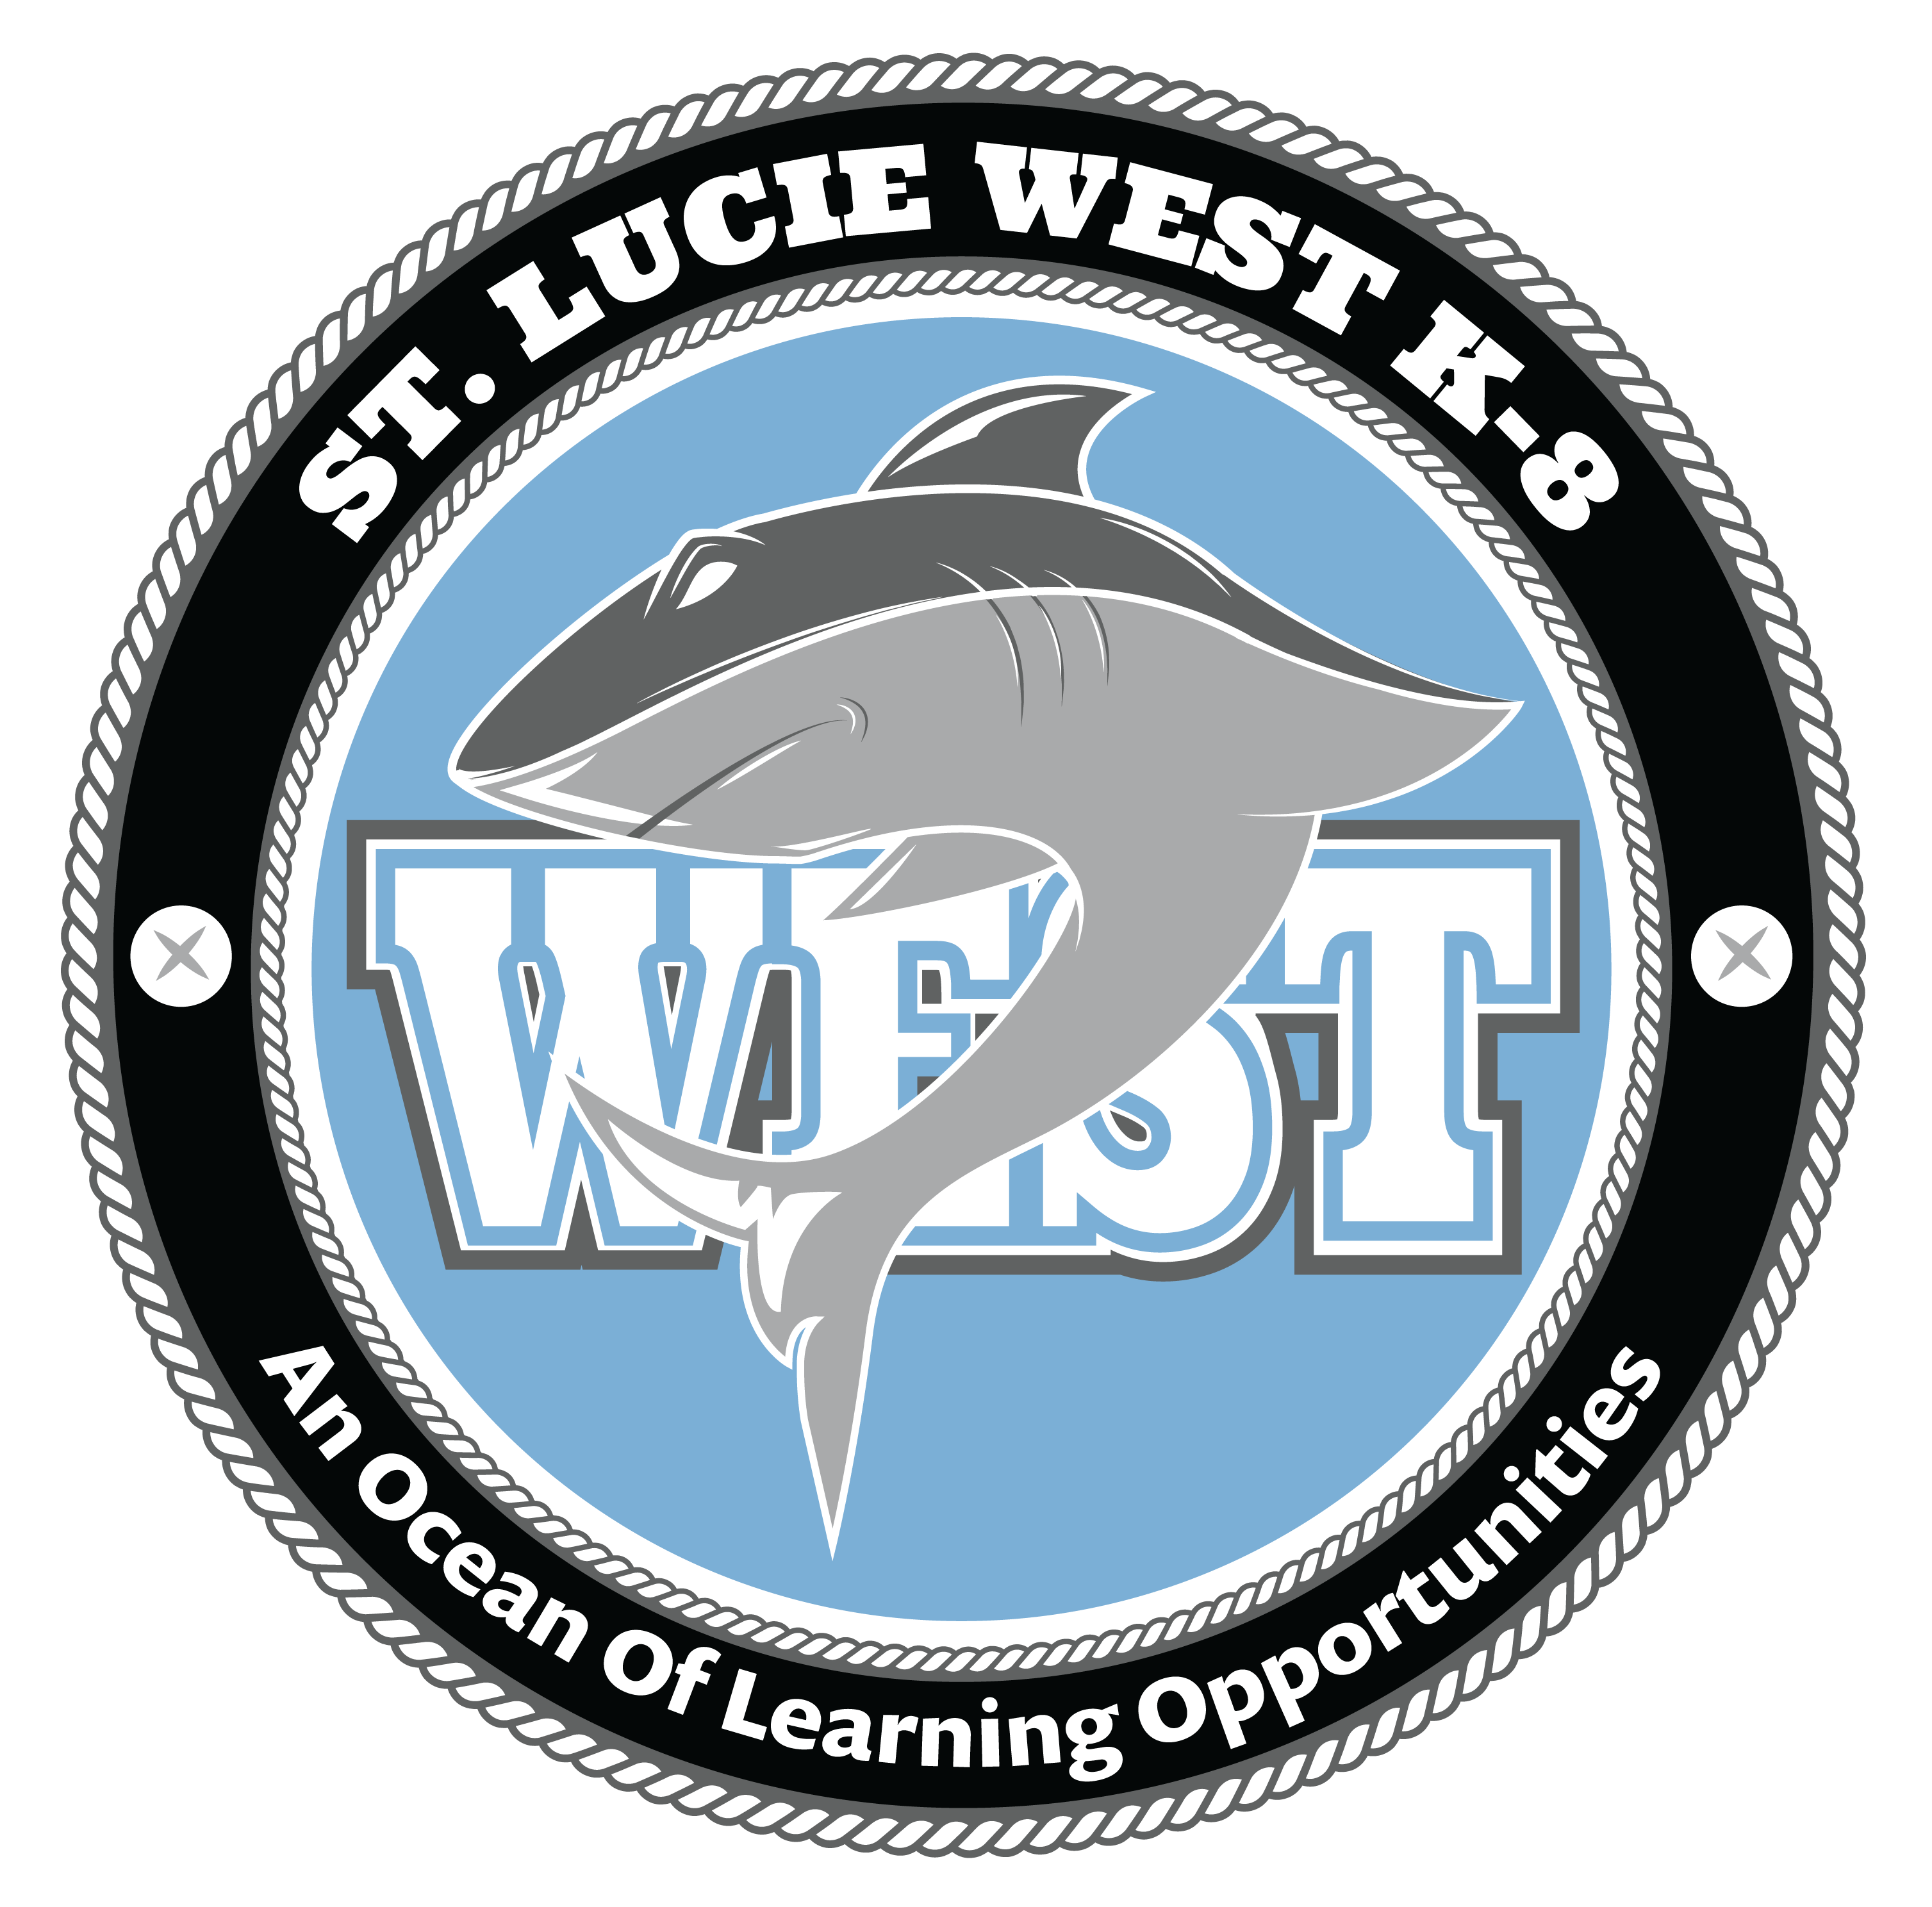 St. Lucie West K-8